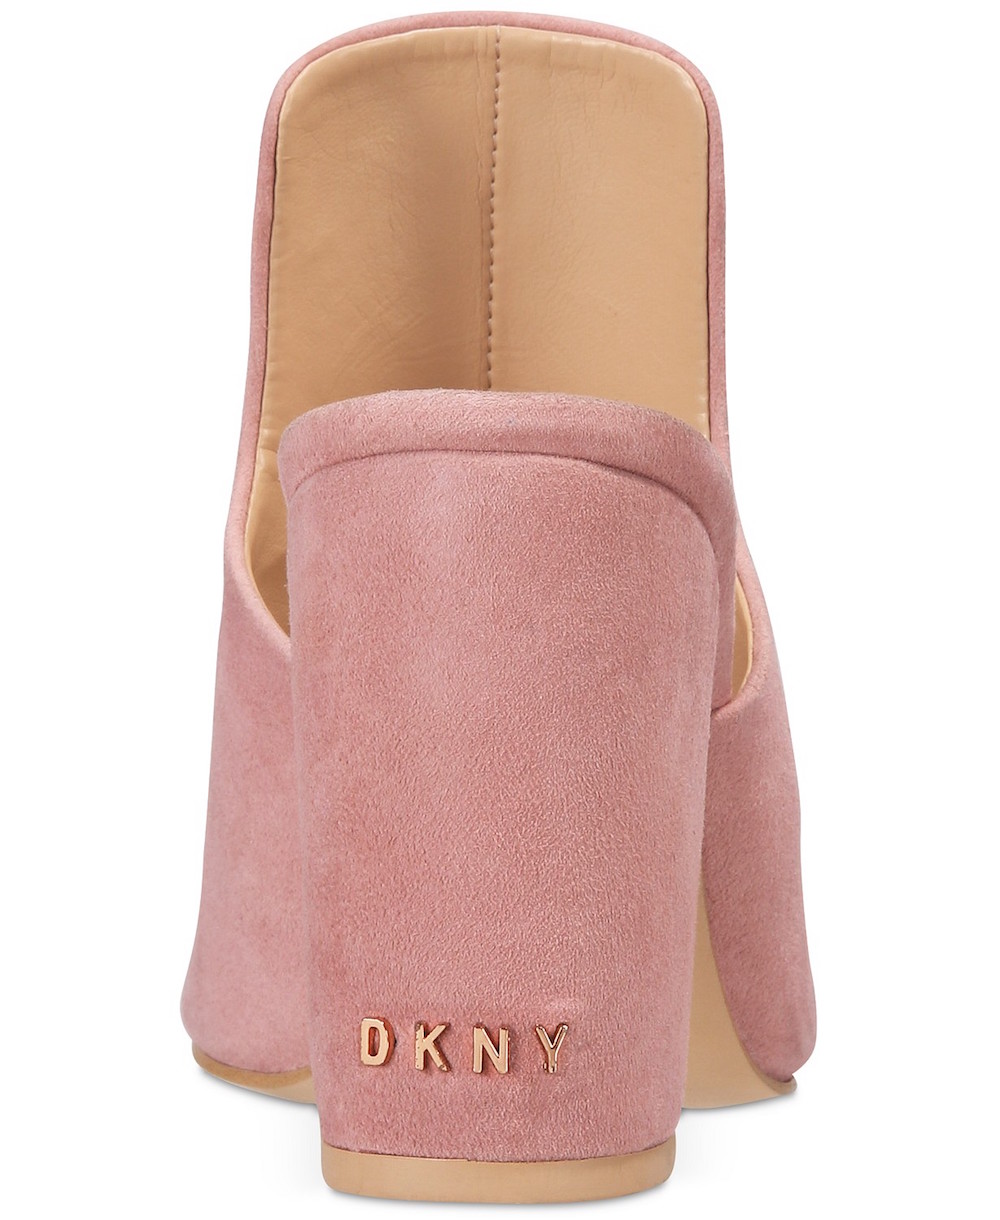 DKNY Womens Hester Fabric Peep Toe Mules, Pink, Size 8.0 vkOw | eBay